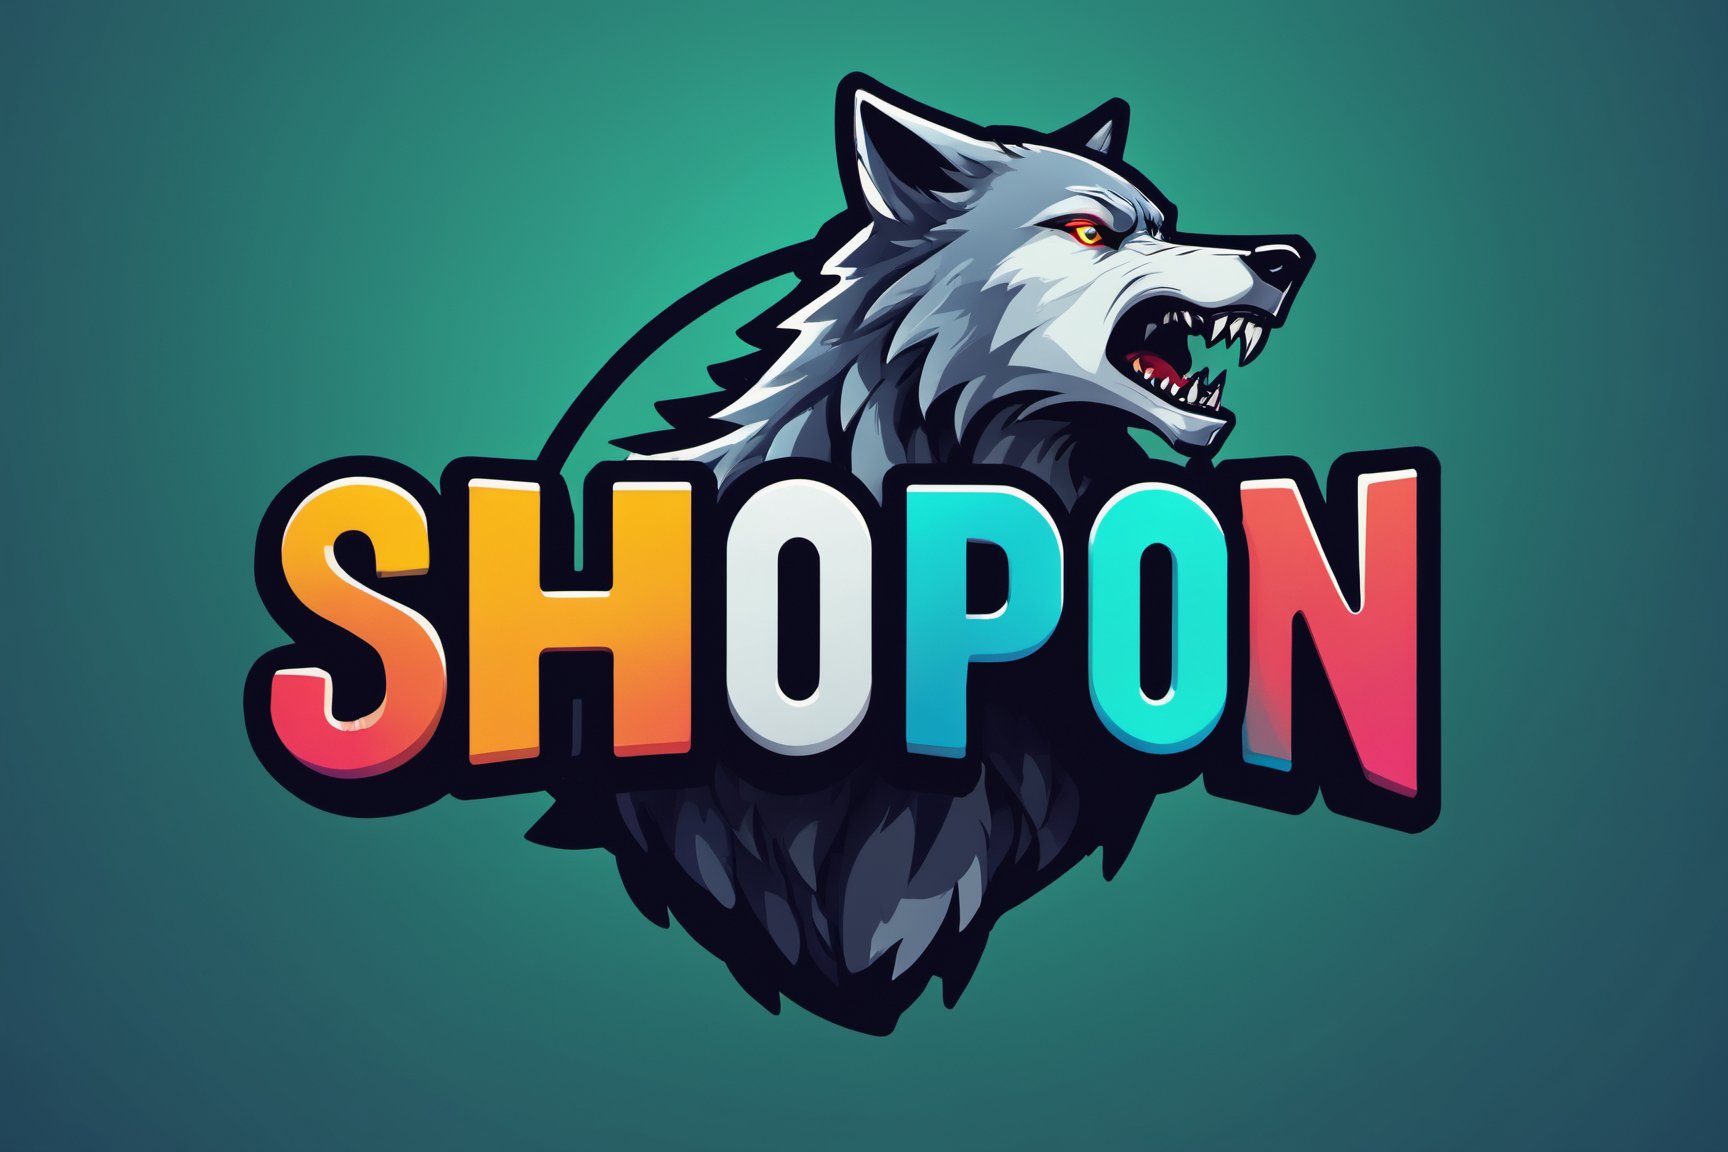 text "SHOPON" text logo, mordern logo of a wolf, colourful, ,Text